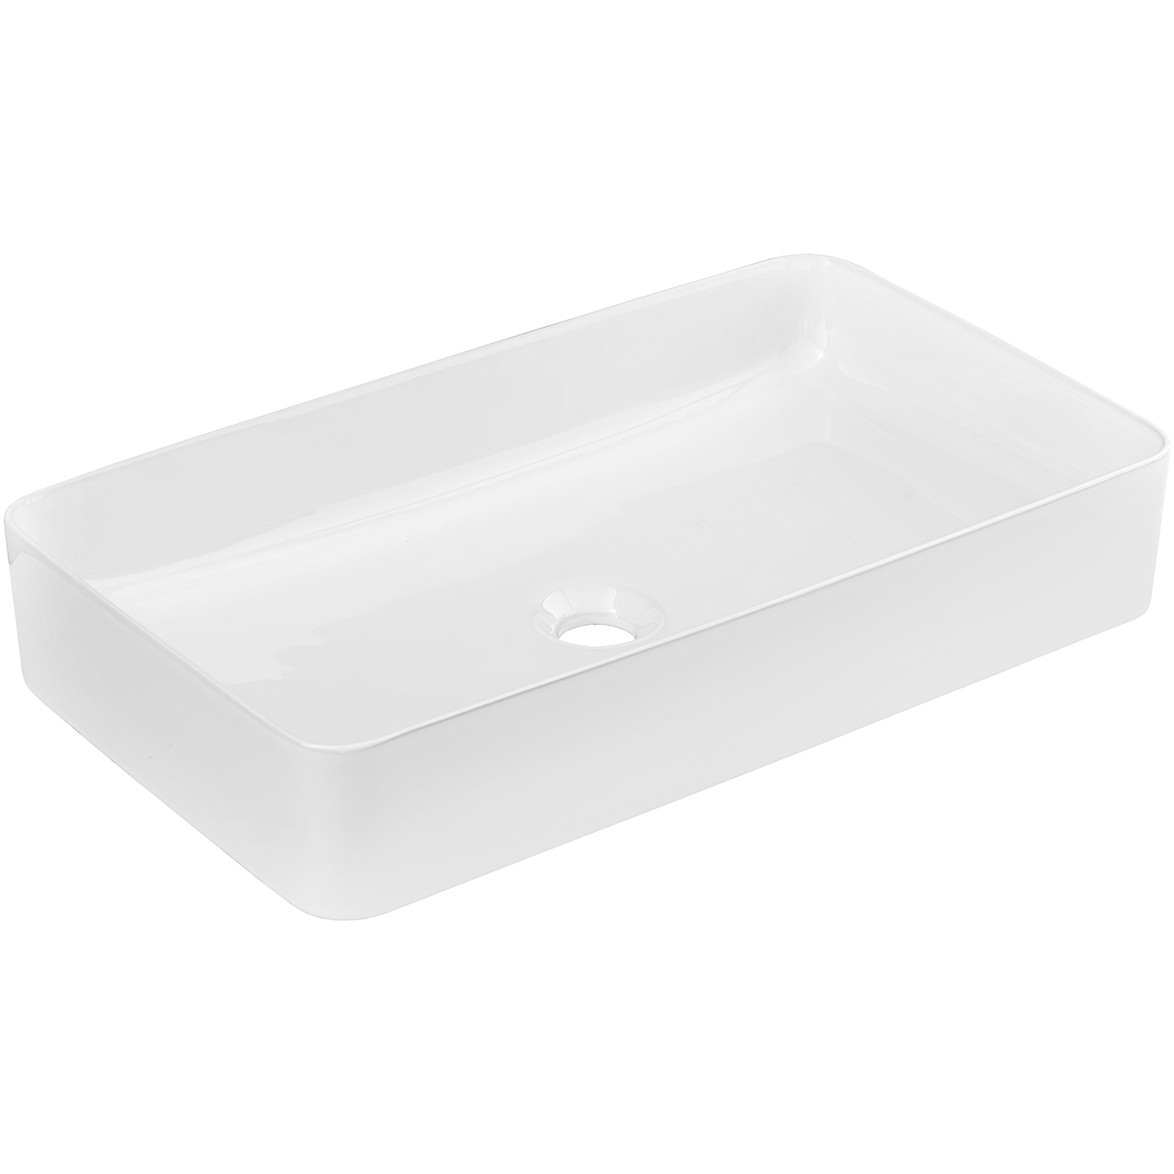 Countertop washbasin RICH 2 white